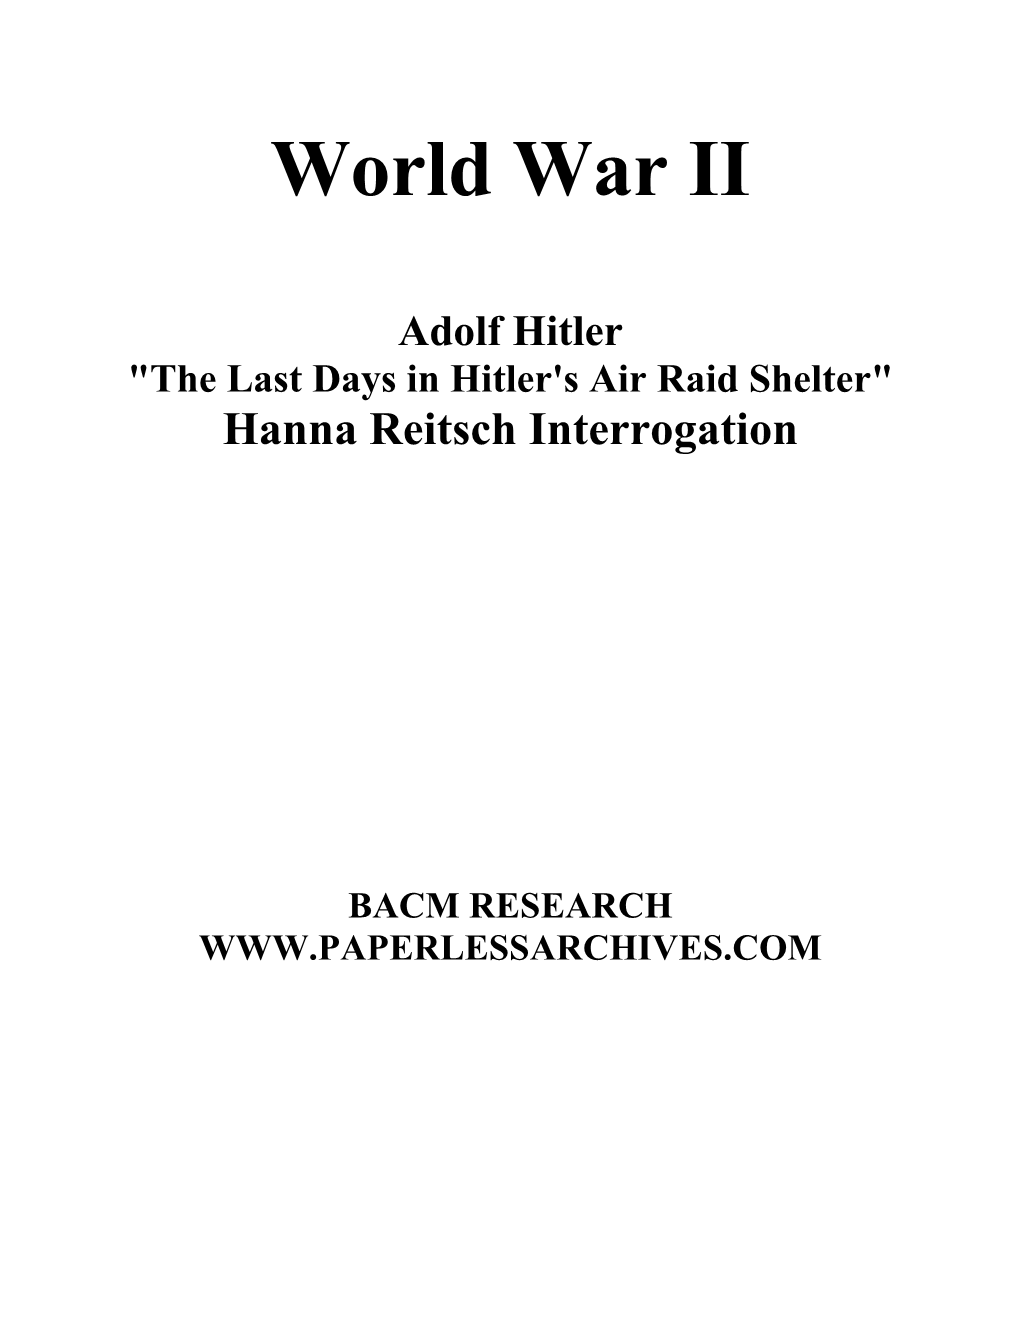 World War II: Adolf Hitler: "The Last Days in Hitler's Air Raid Shelter"